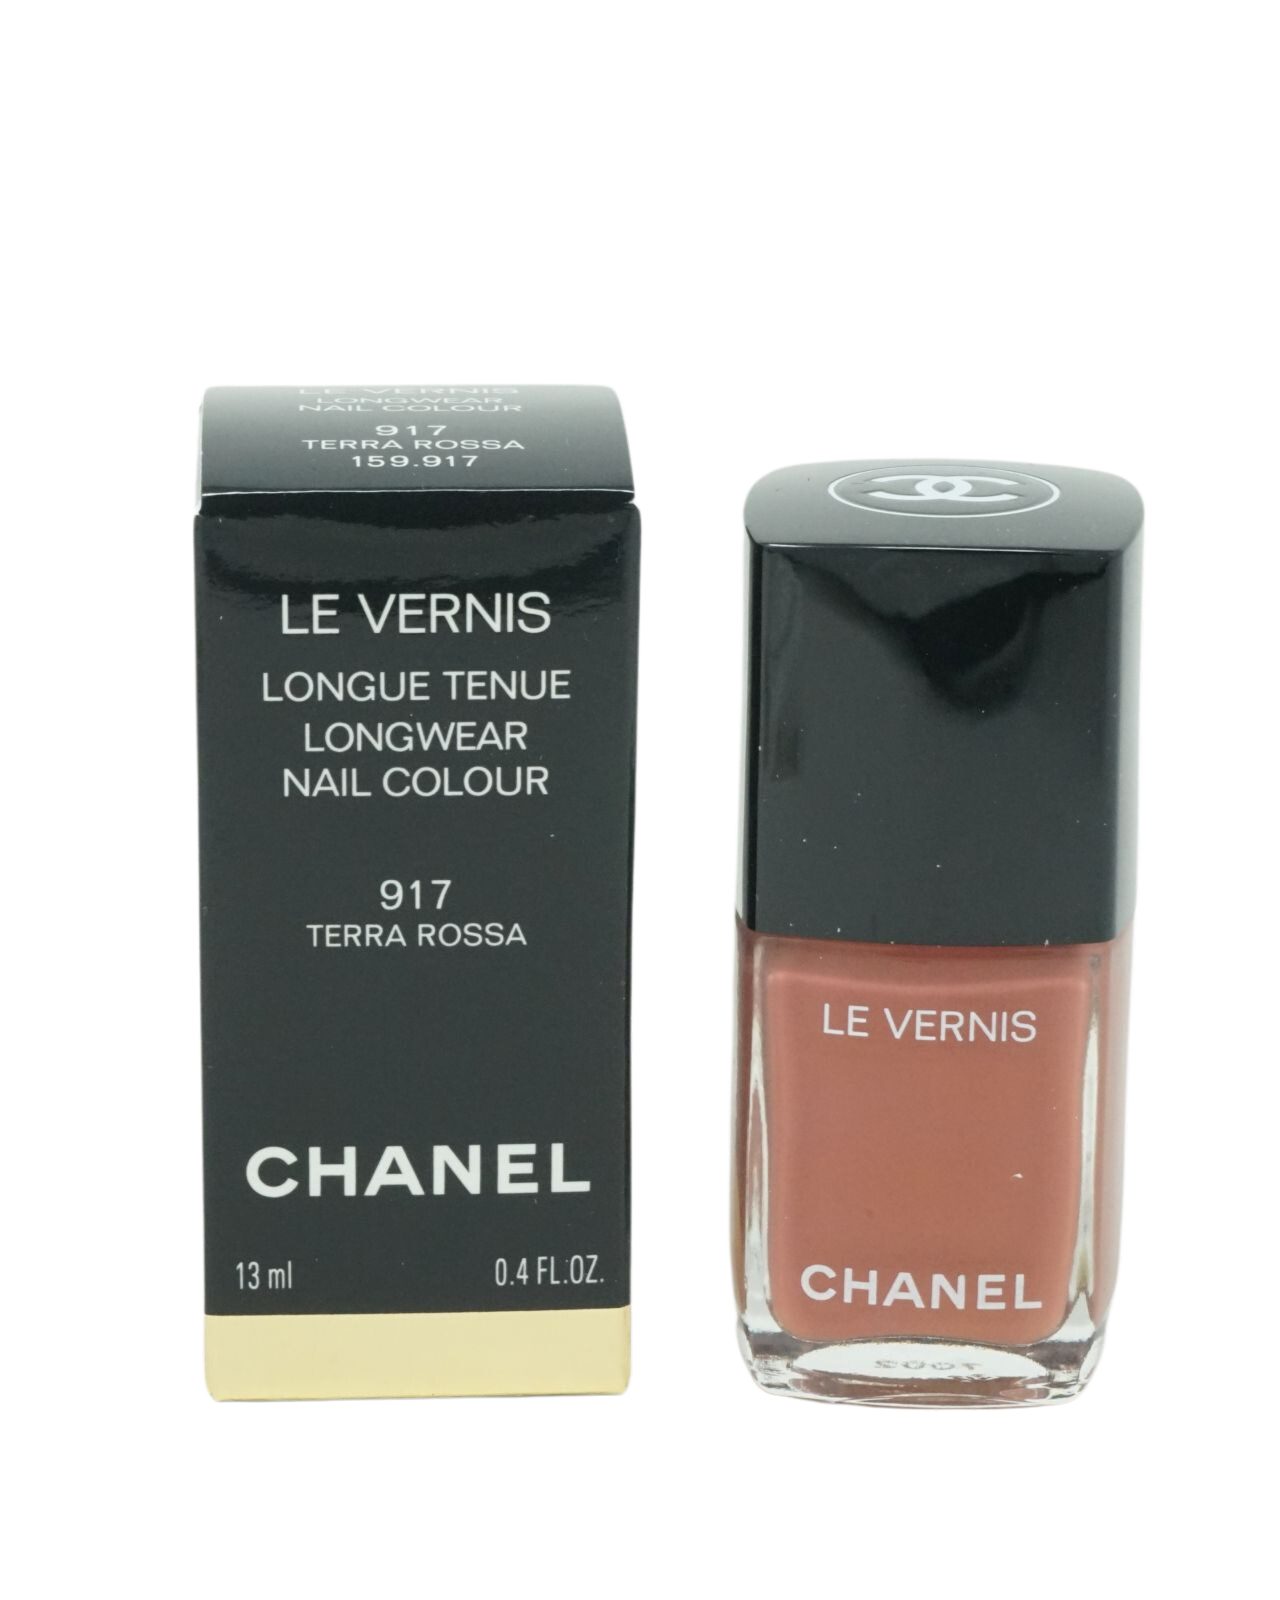 CHANEL Nagellack Chanel Le Vernis Longwear Nagellack 13ml 917 Terra Rossa